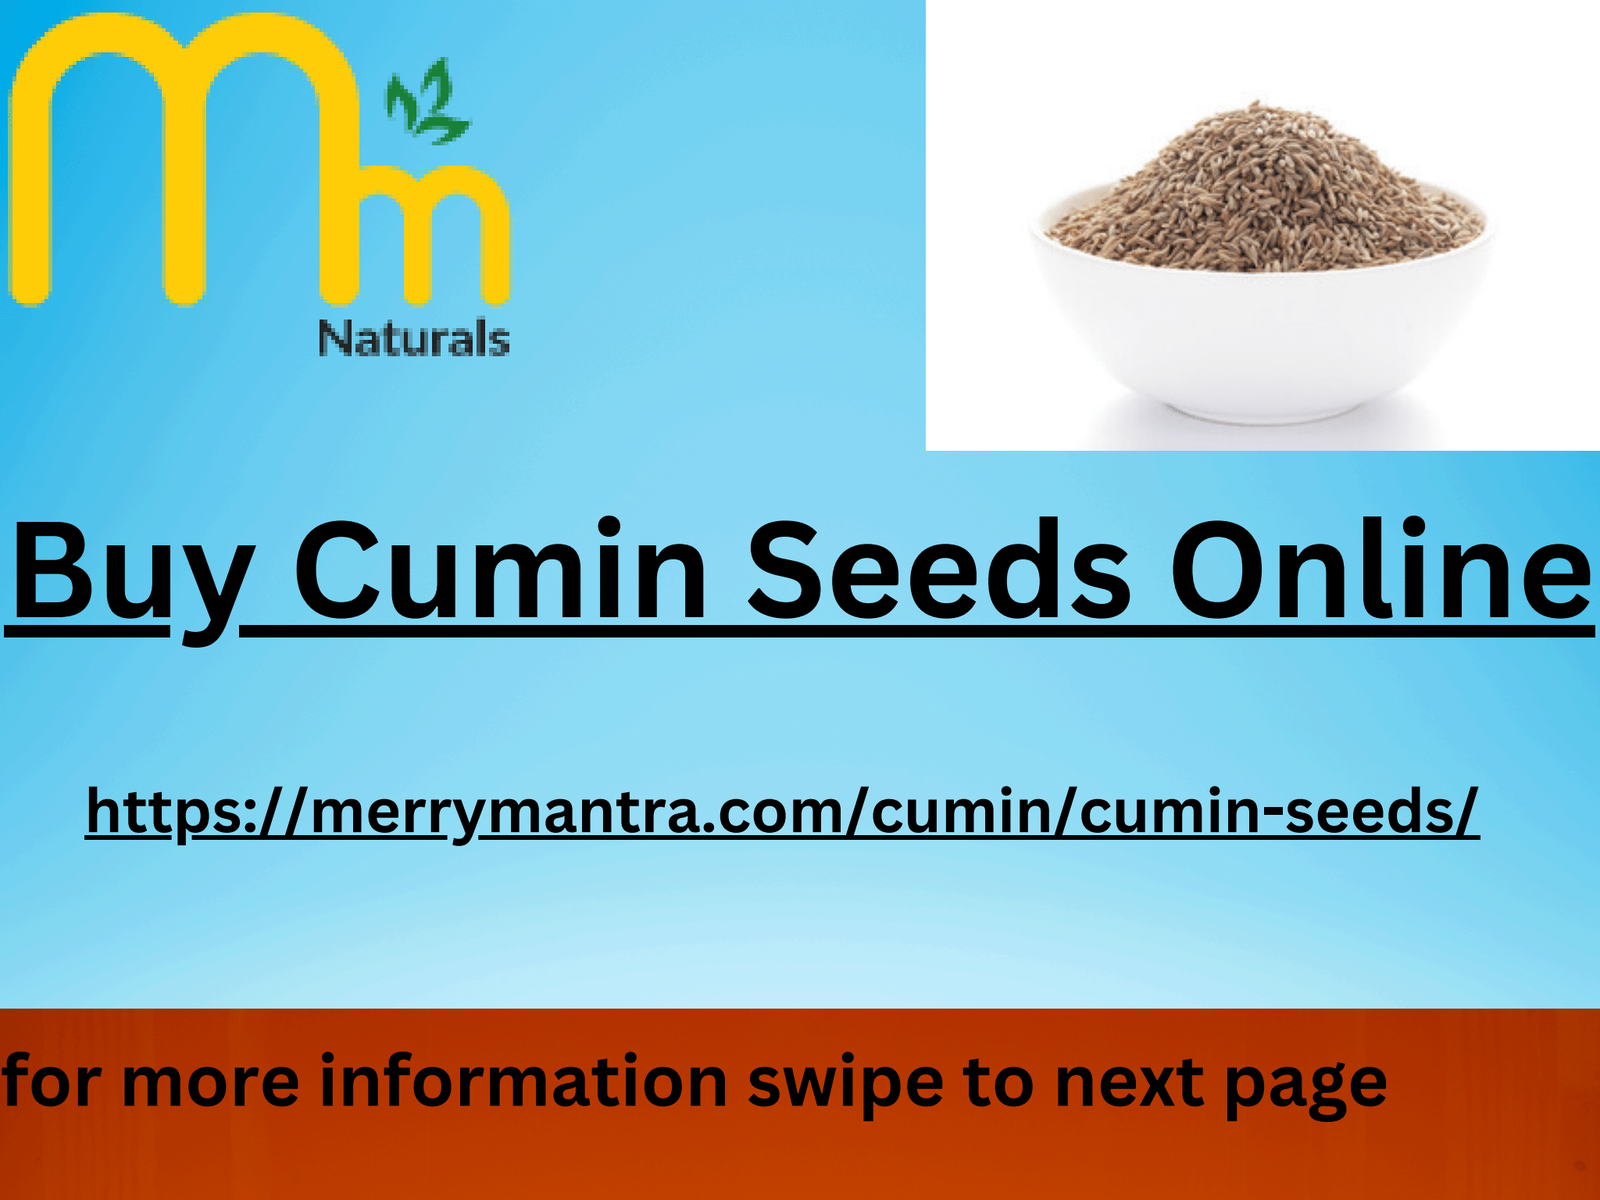 Dropbox - Buy Cumin Seeds Online (1).pdf - Simplify your life